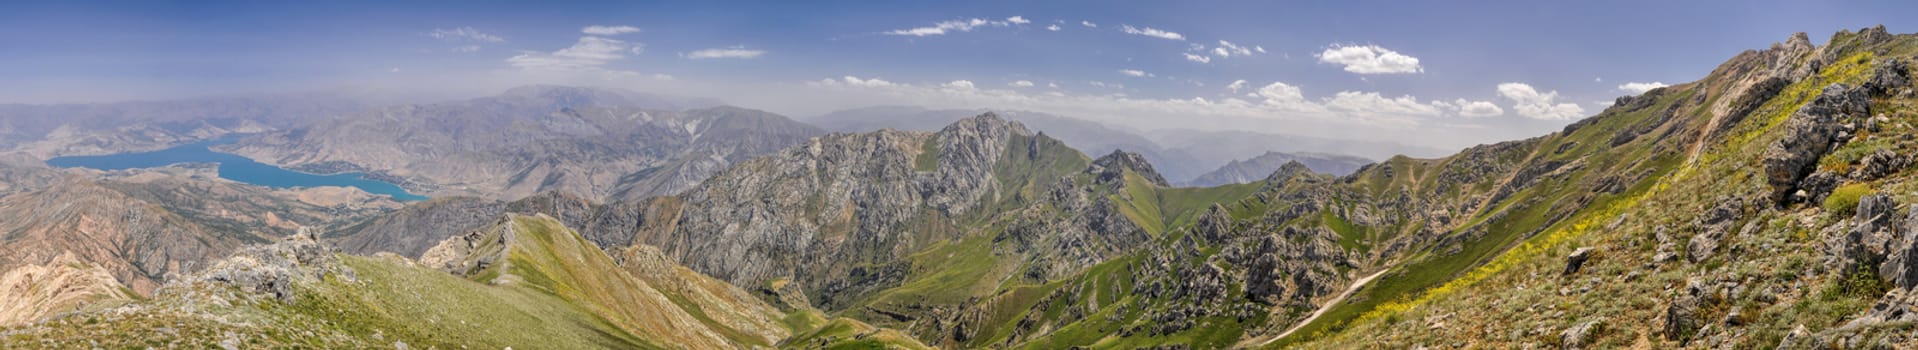 Scenic panorama of mountainous landscape of Tian Shan mountain range near Chimgan  in Uzbekistan